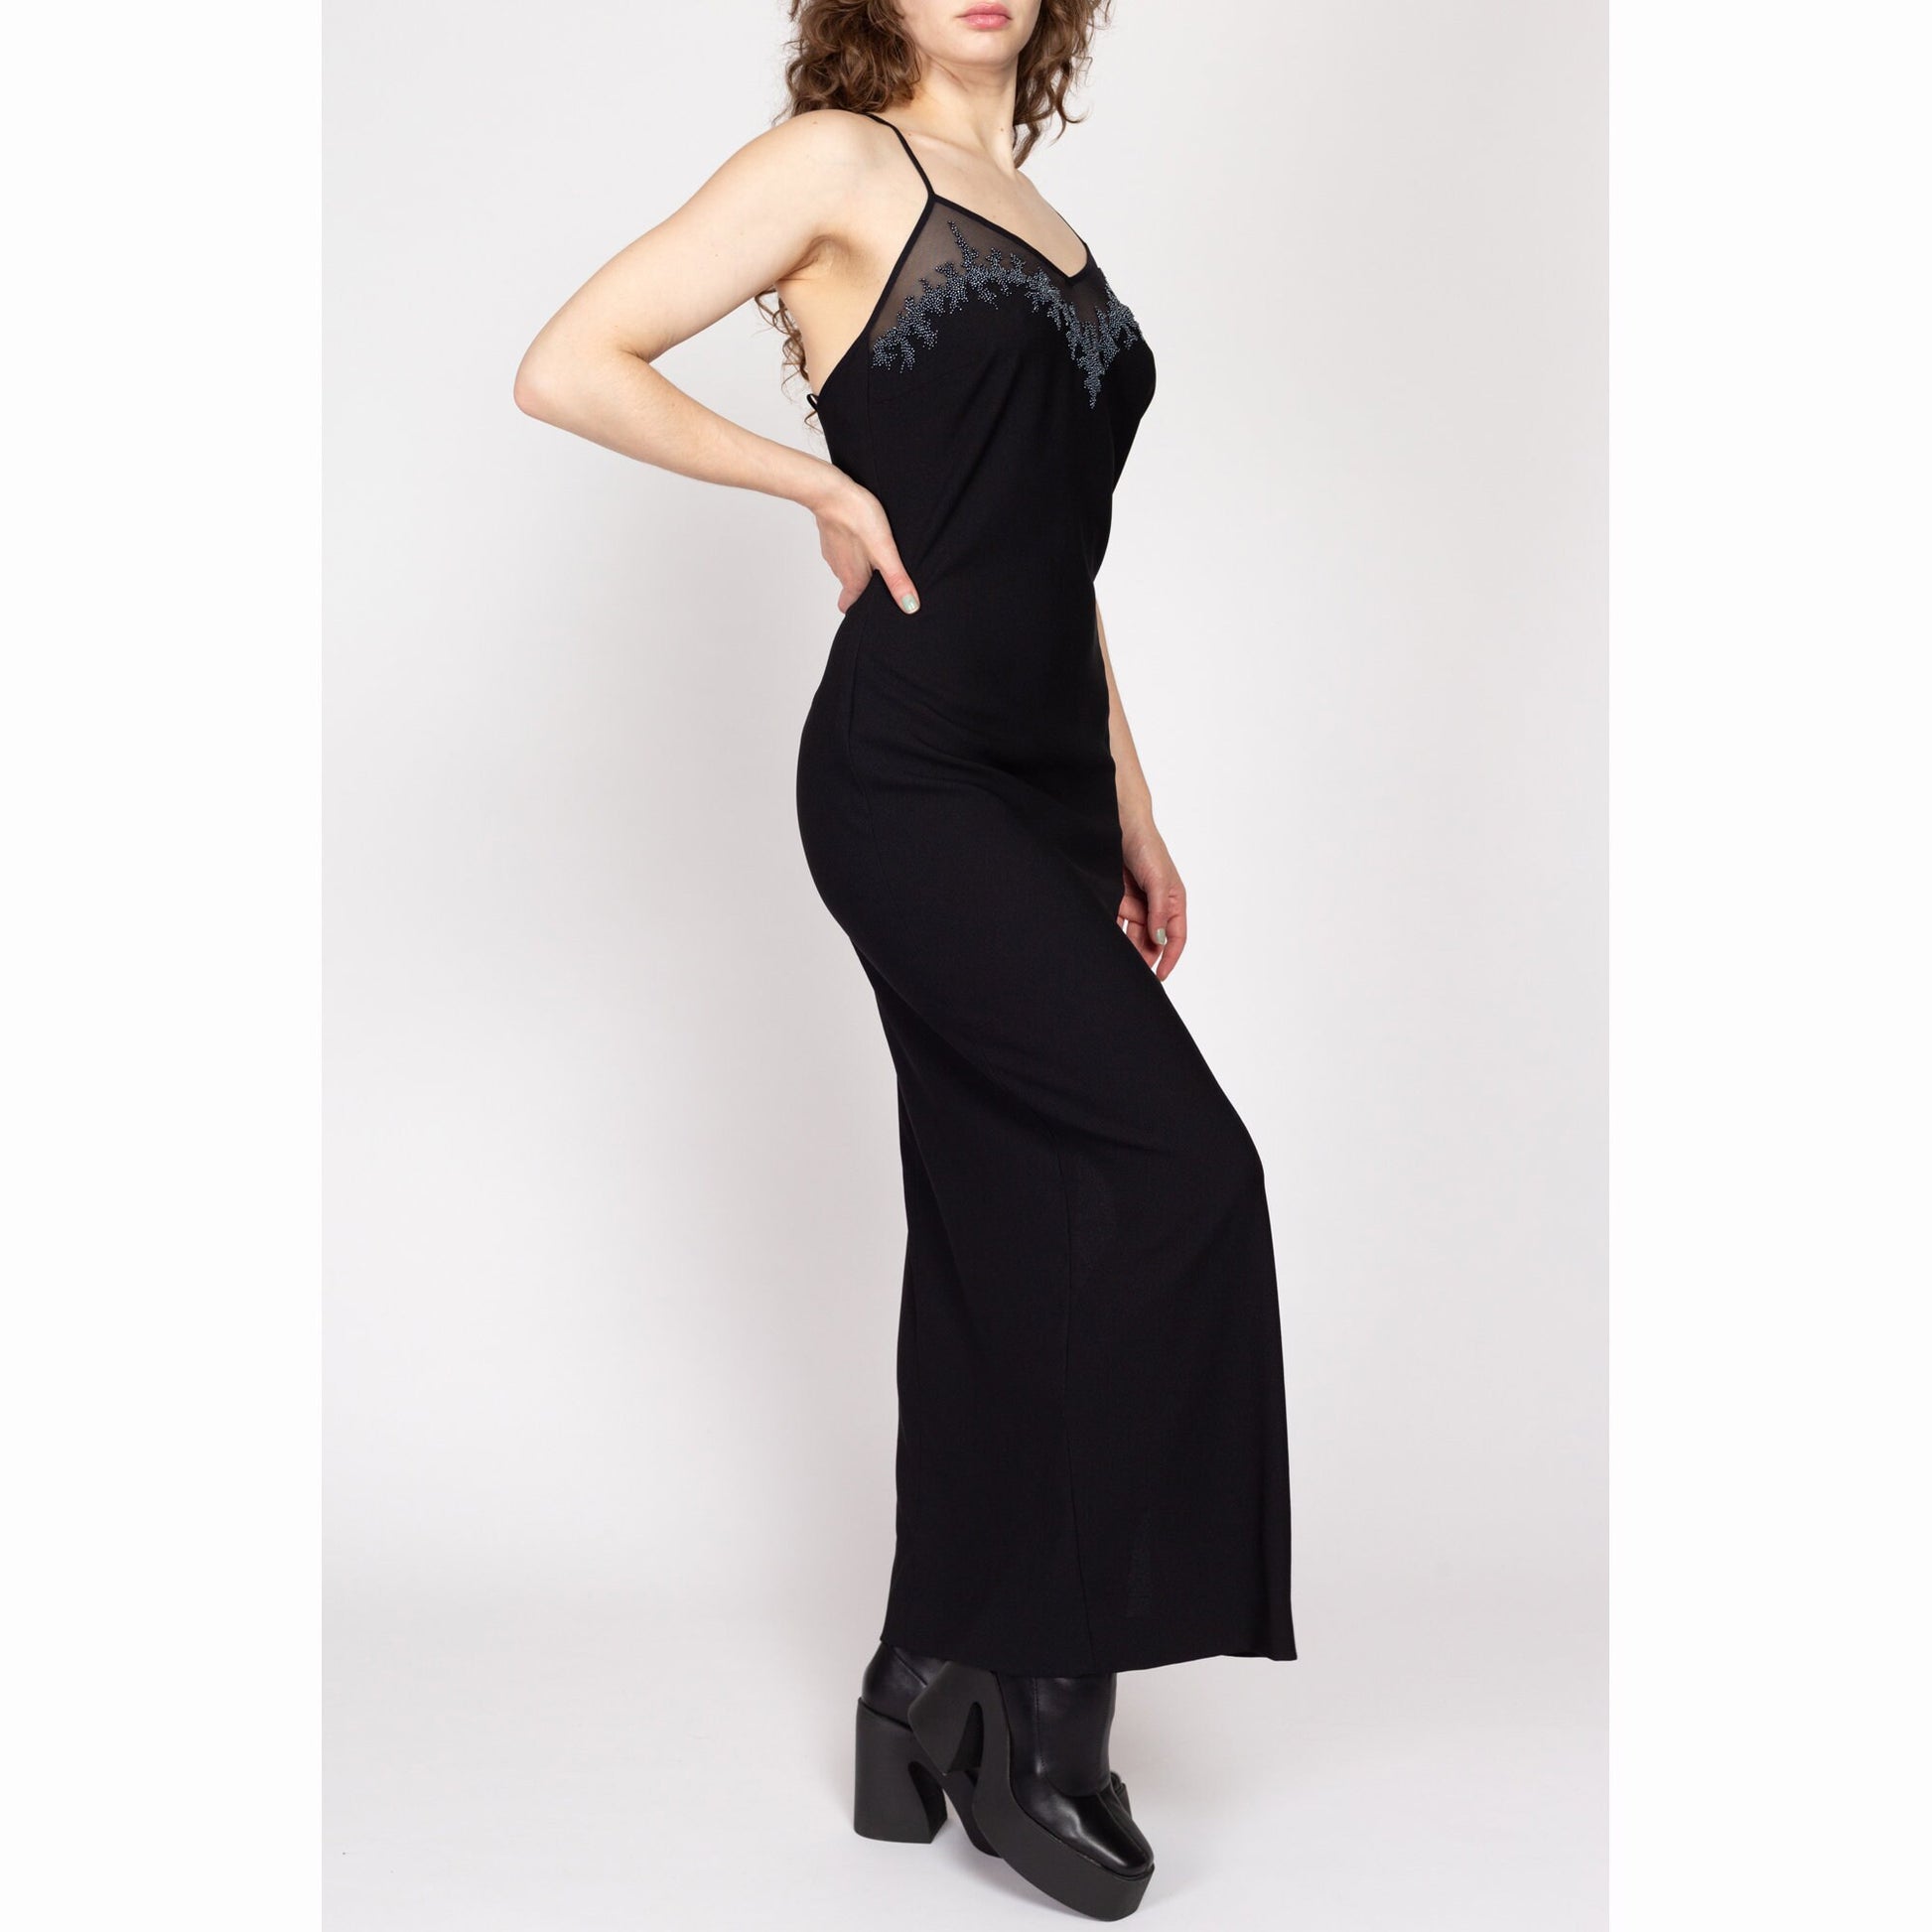 Medium 90s Black Beaded Low Cross Back Maxi Dress | Vintage Spaghetti Strap Sleeveless Slinky Sexy Formal Gown